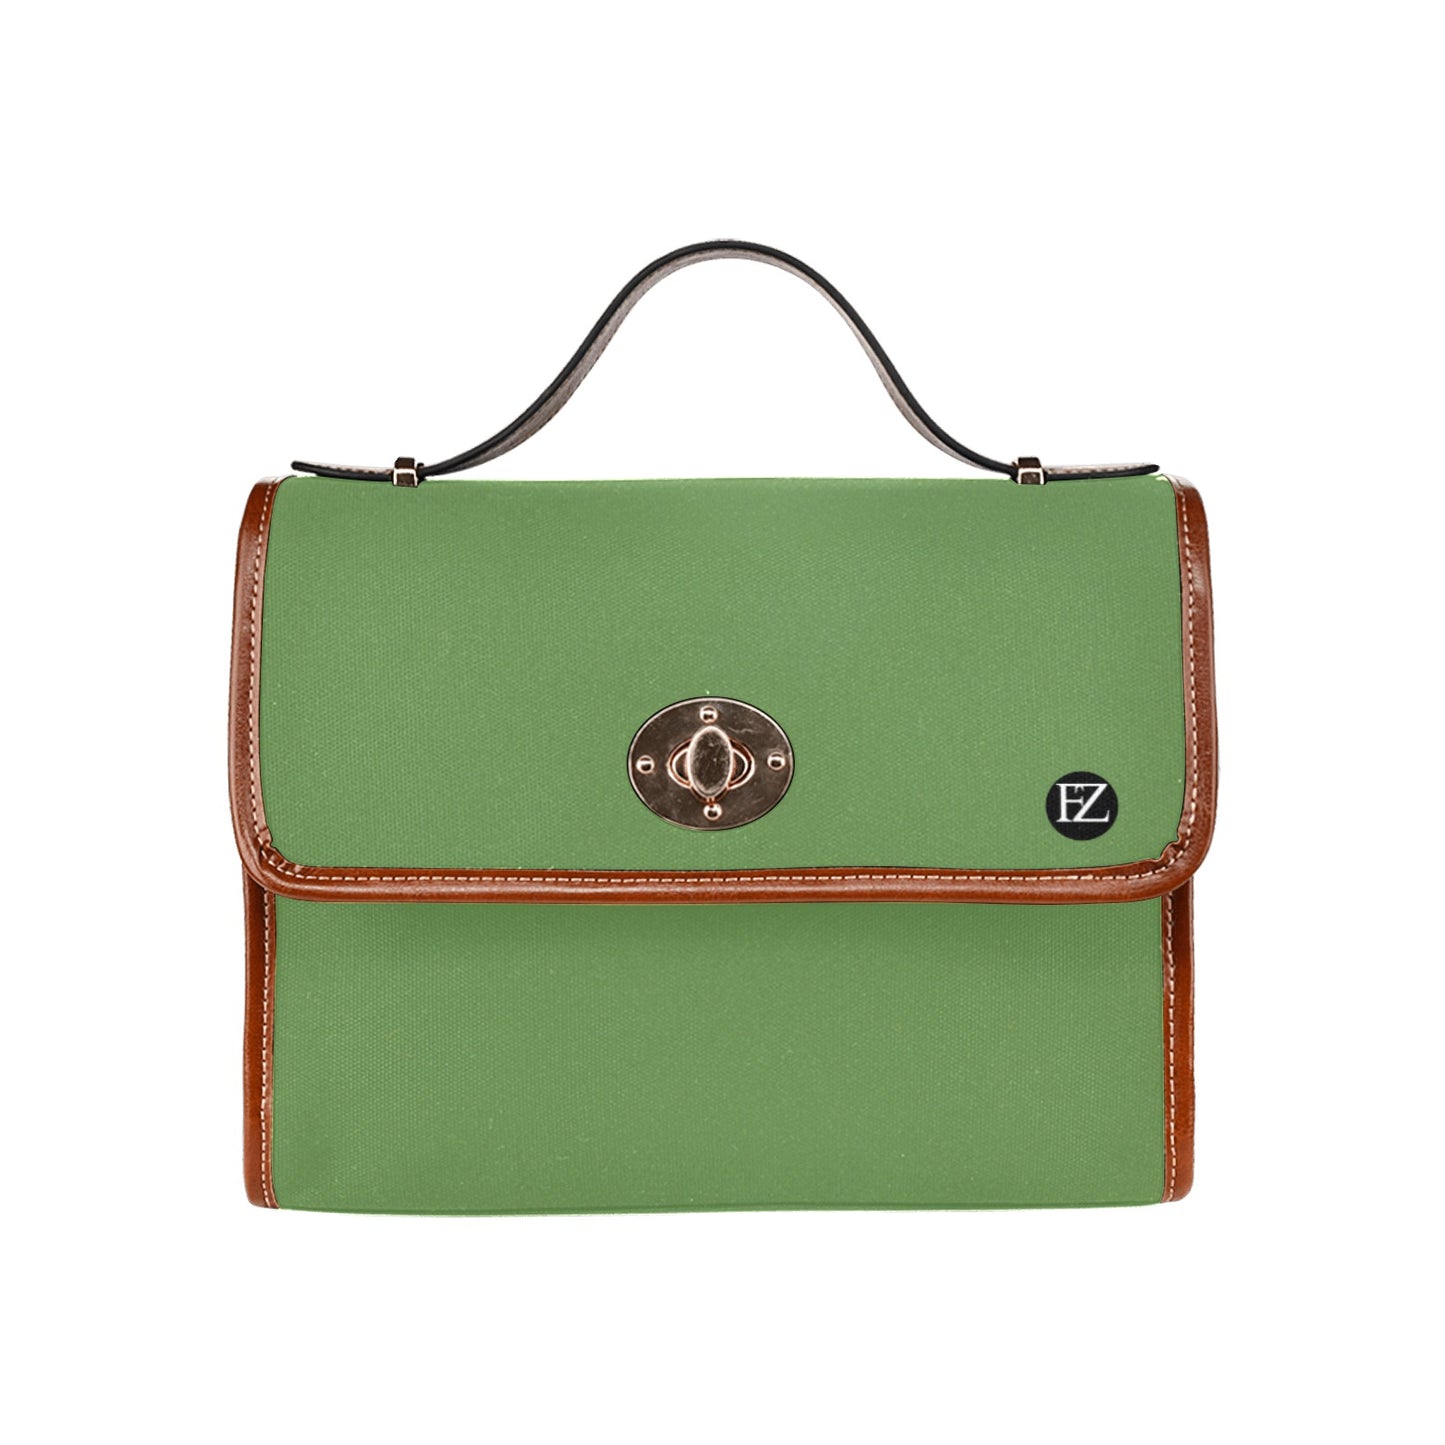 fz original handbag one size / fz 0riginal handbag - green all over print waterproof canvas bag(model1641)(brown strap)